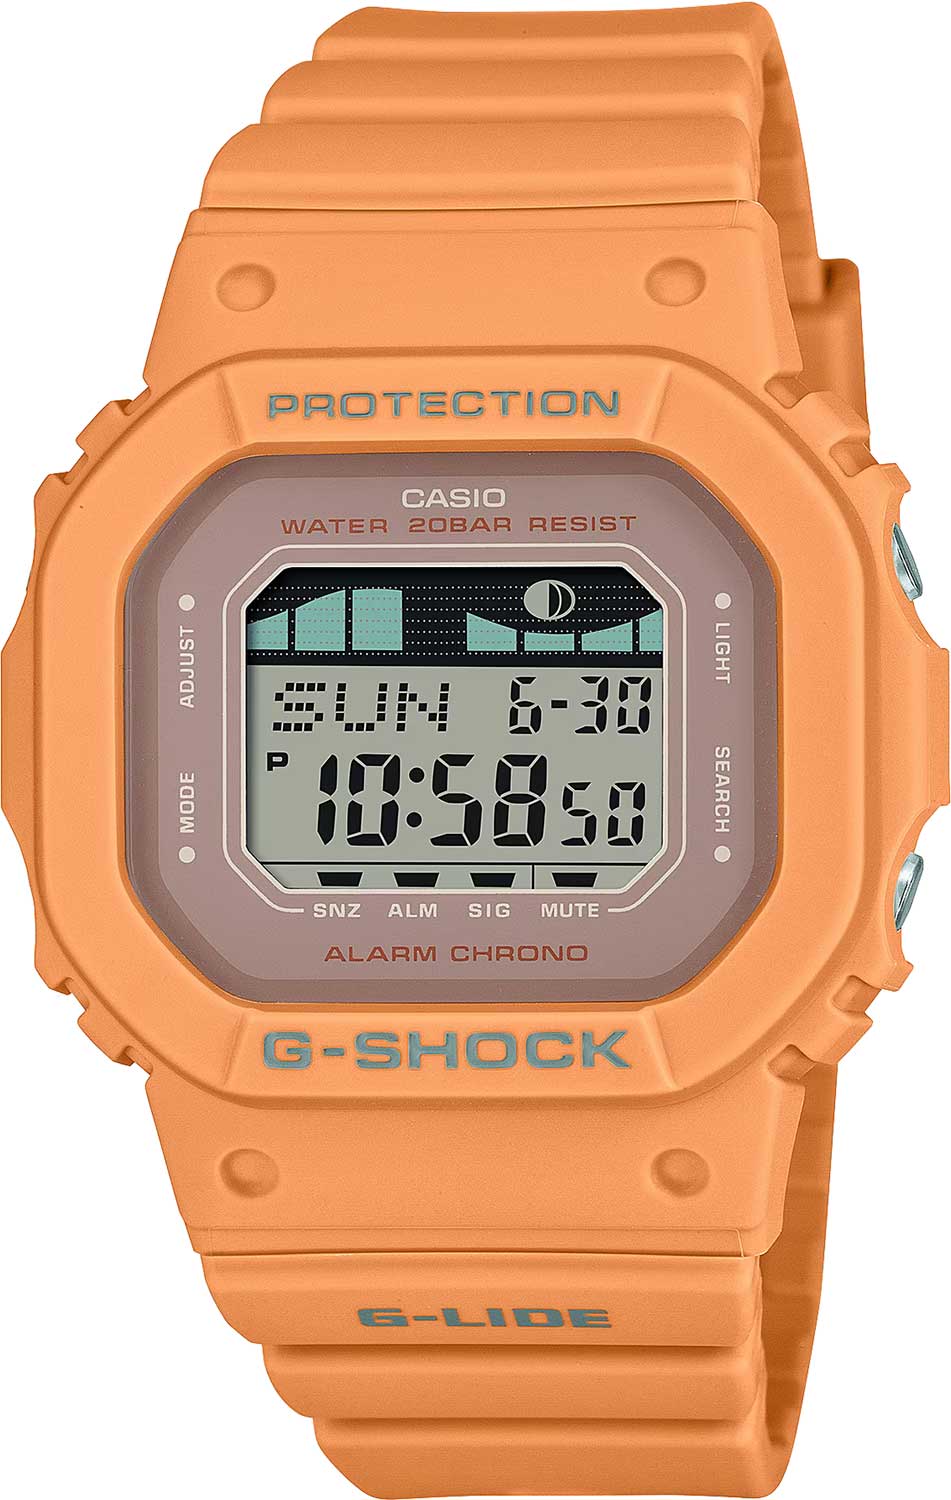    Casio G-SHOCK GLX-S5600-4  